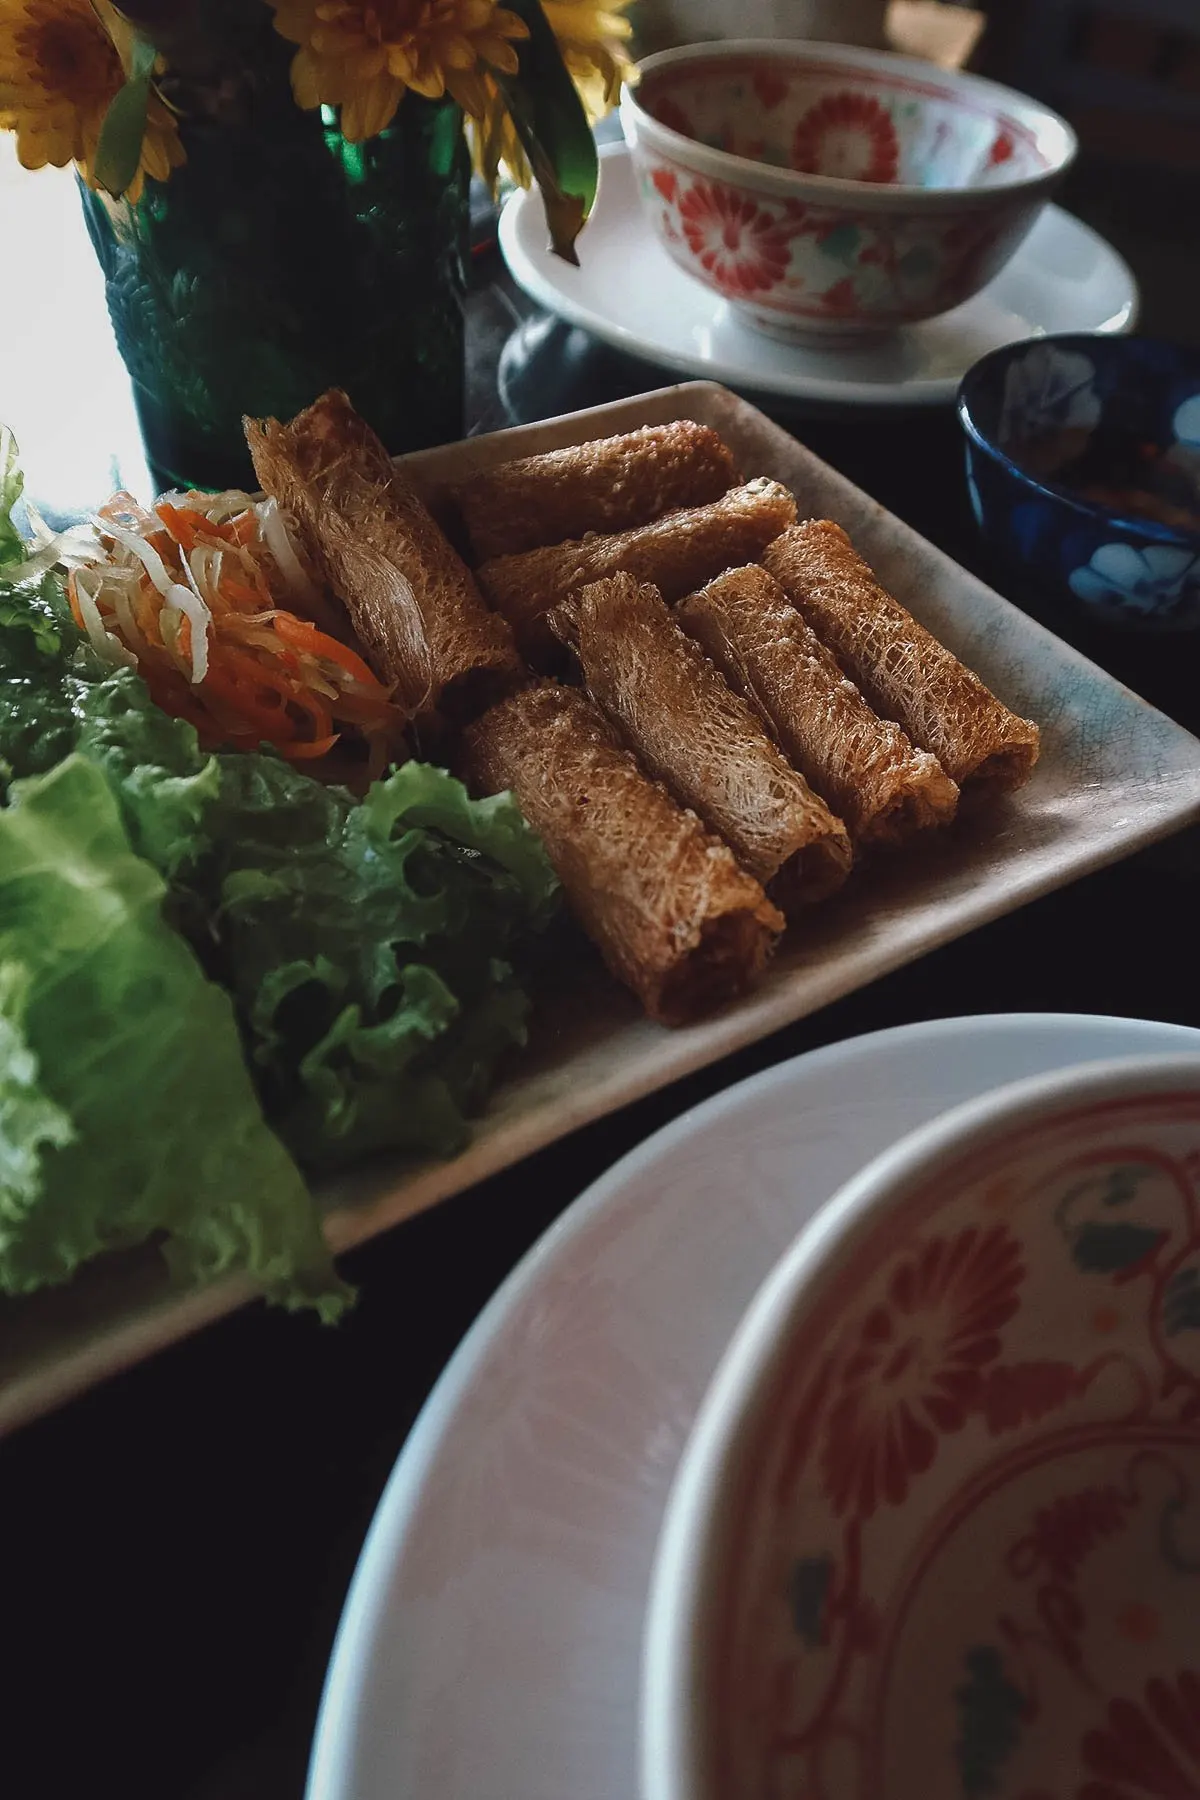 Spring rolls at Hoa Hien restaurant in Hoi An, Vietnam